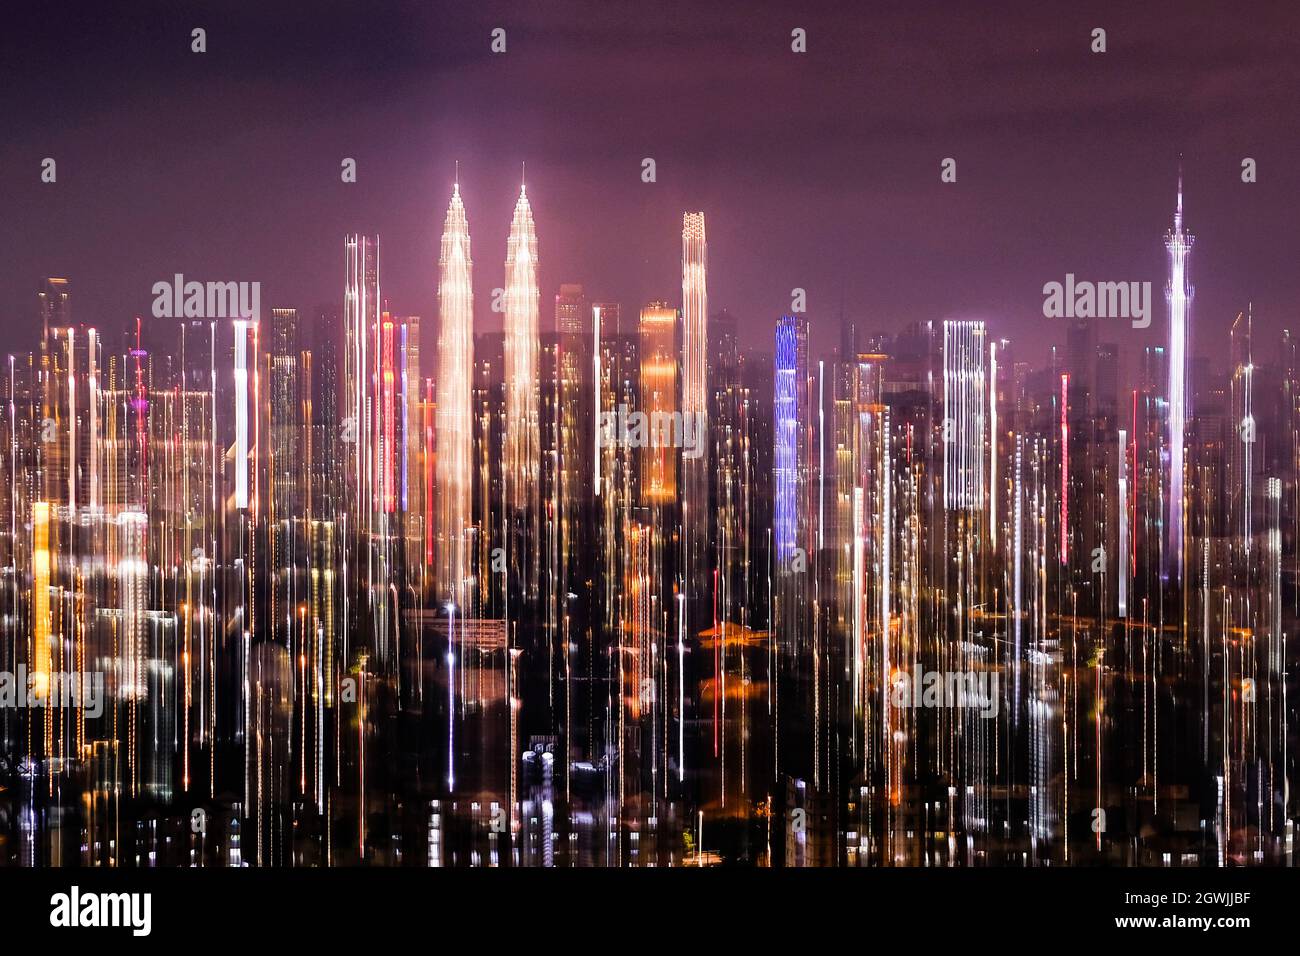 Illuminated Modern Buildings Against Sky At Night Stock Photo